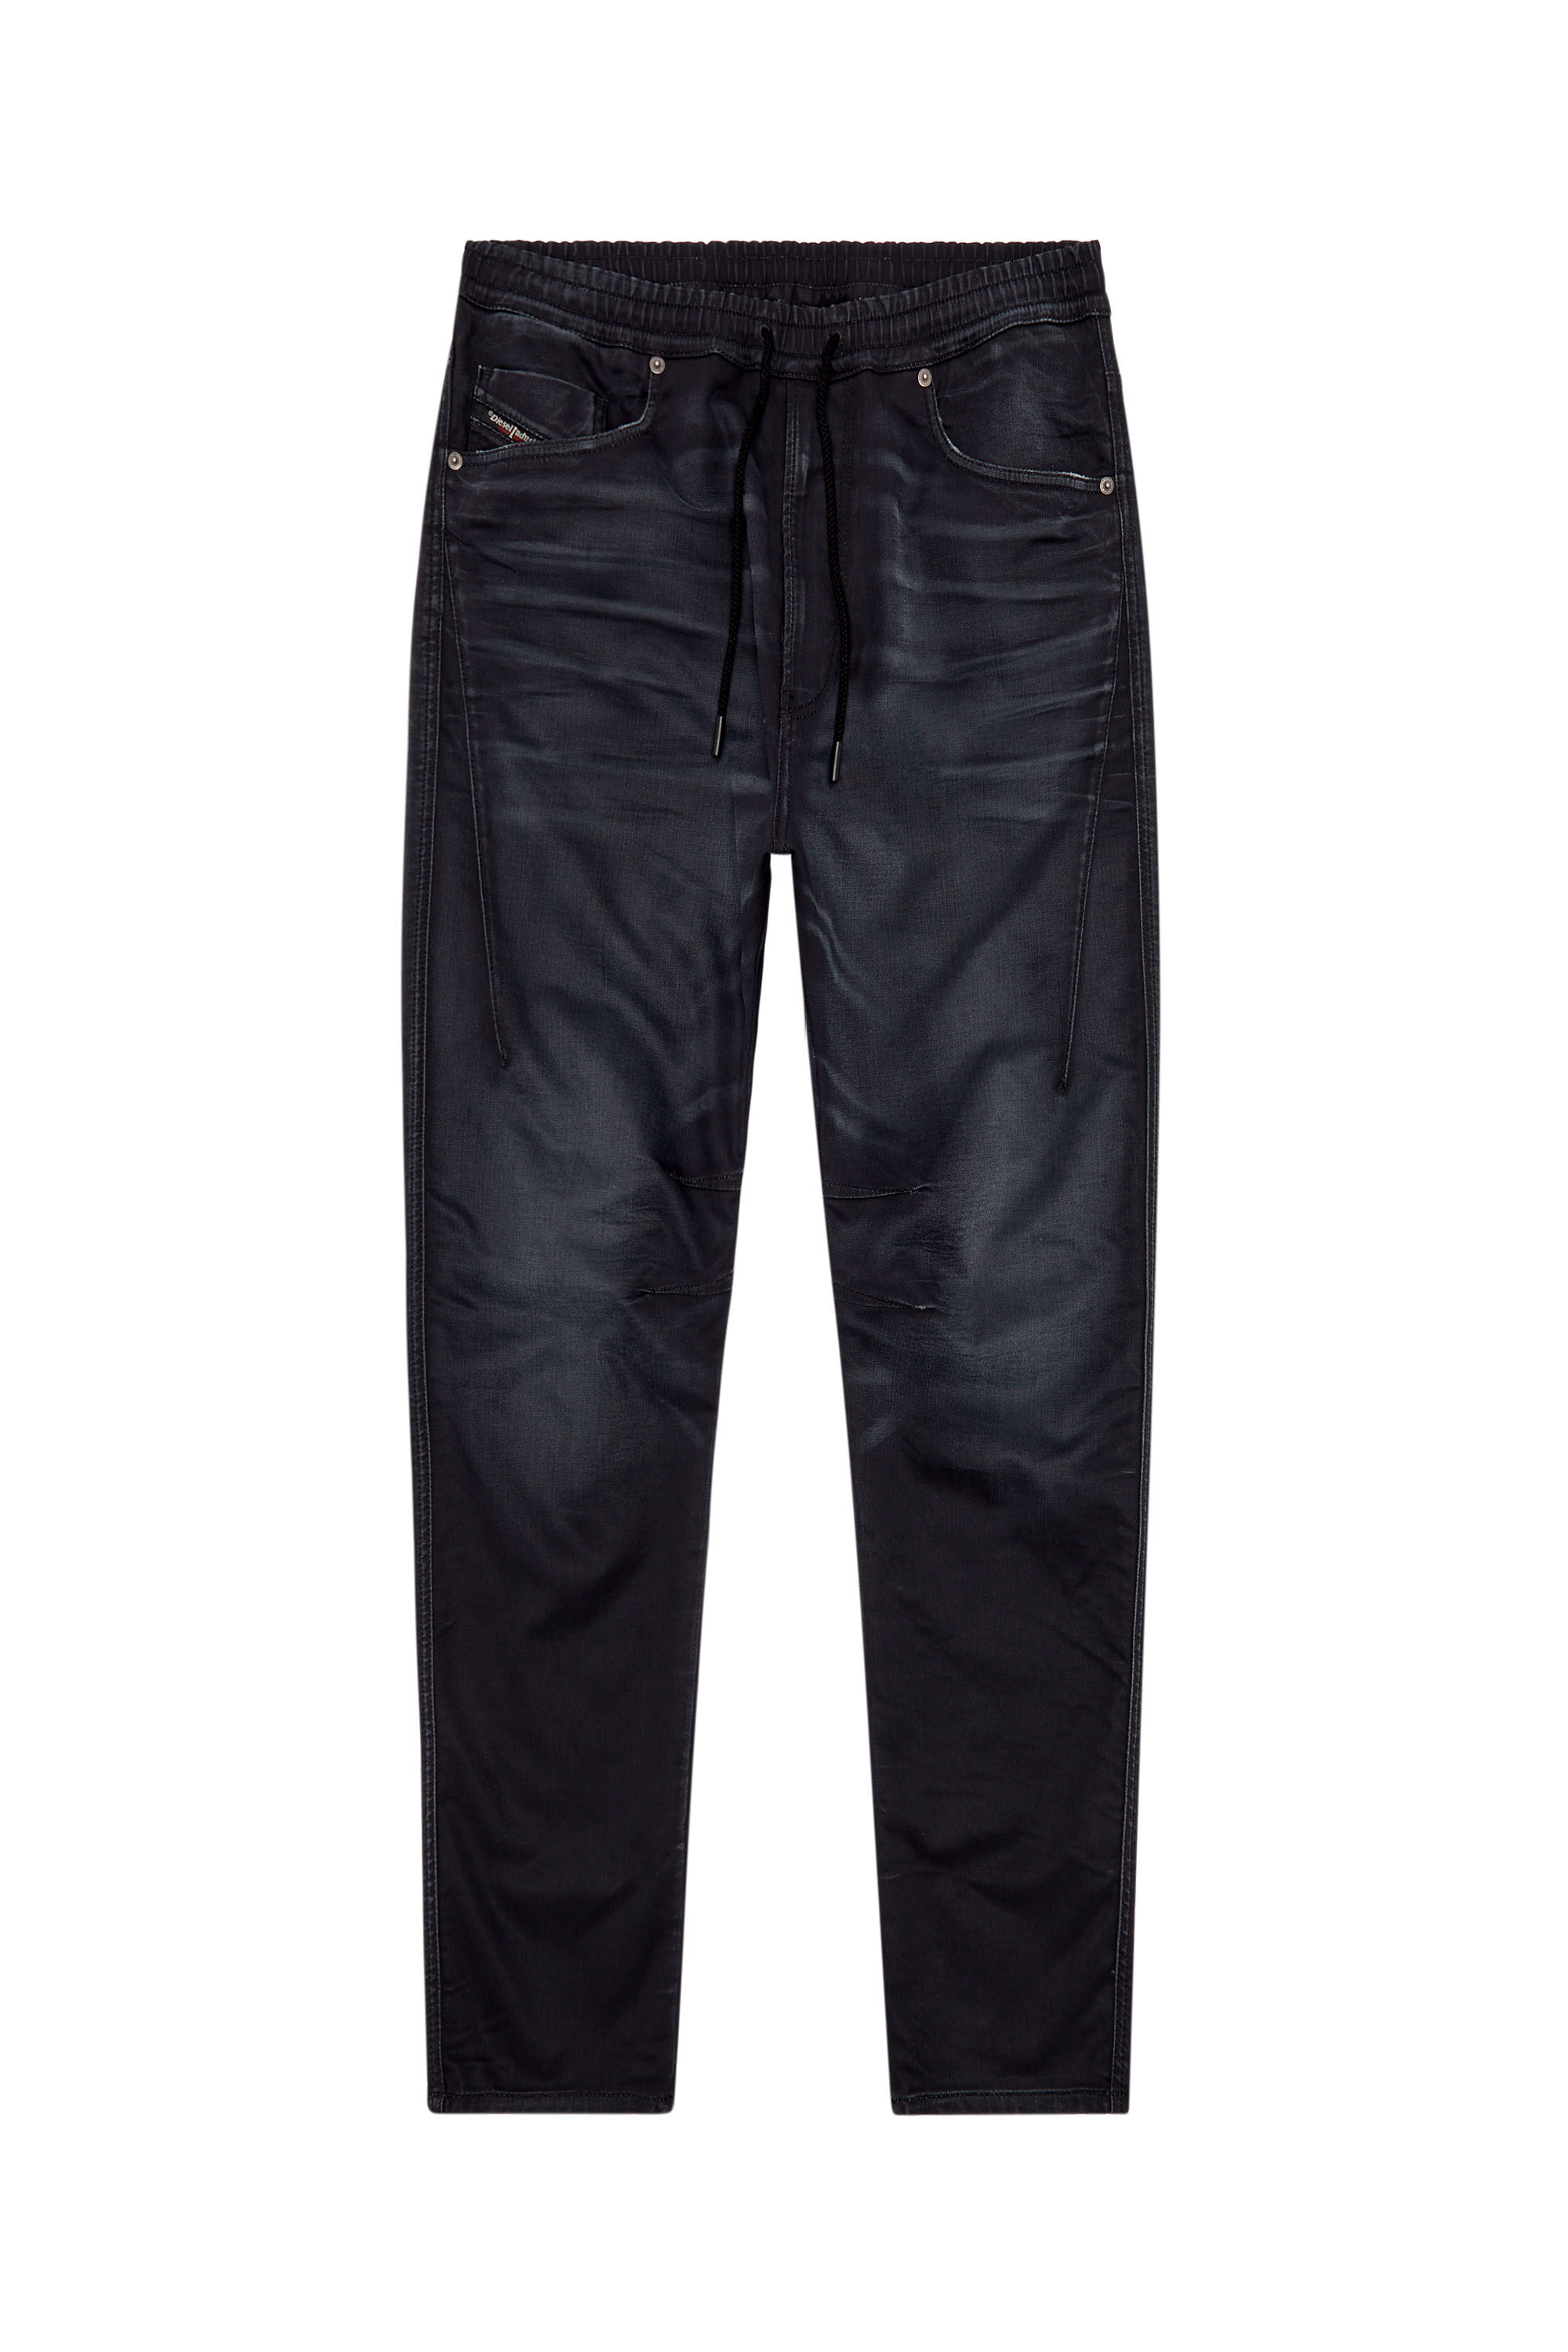 Men's Tapered Jeans | Black/Dark grey | Diesel 2040 D-Amage Joggjeans®